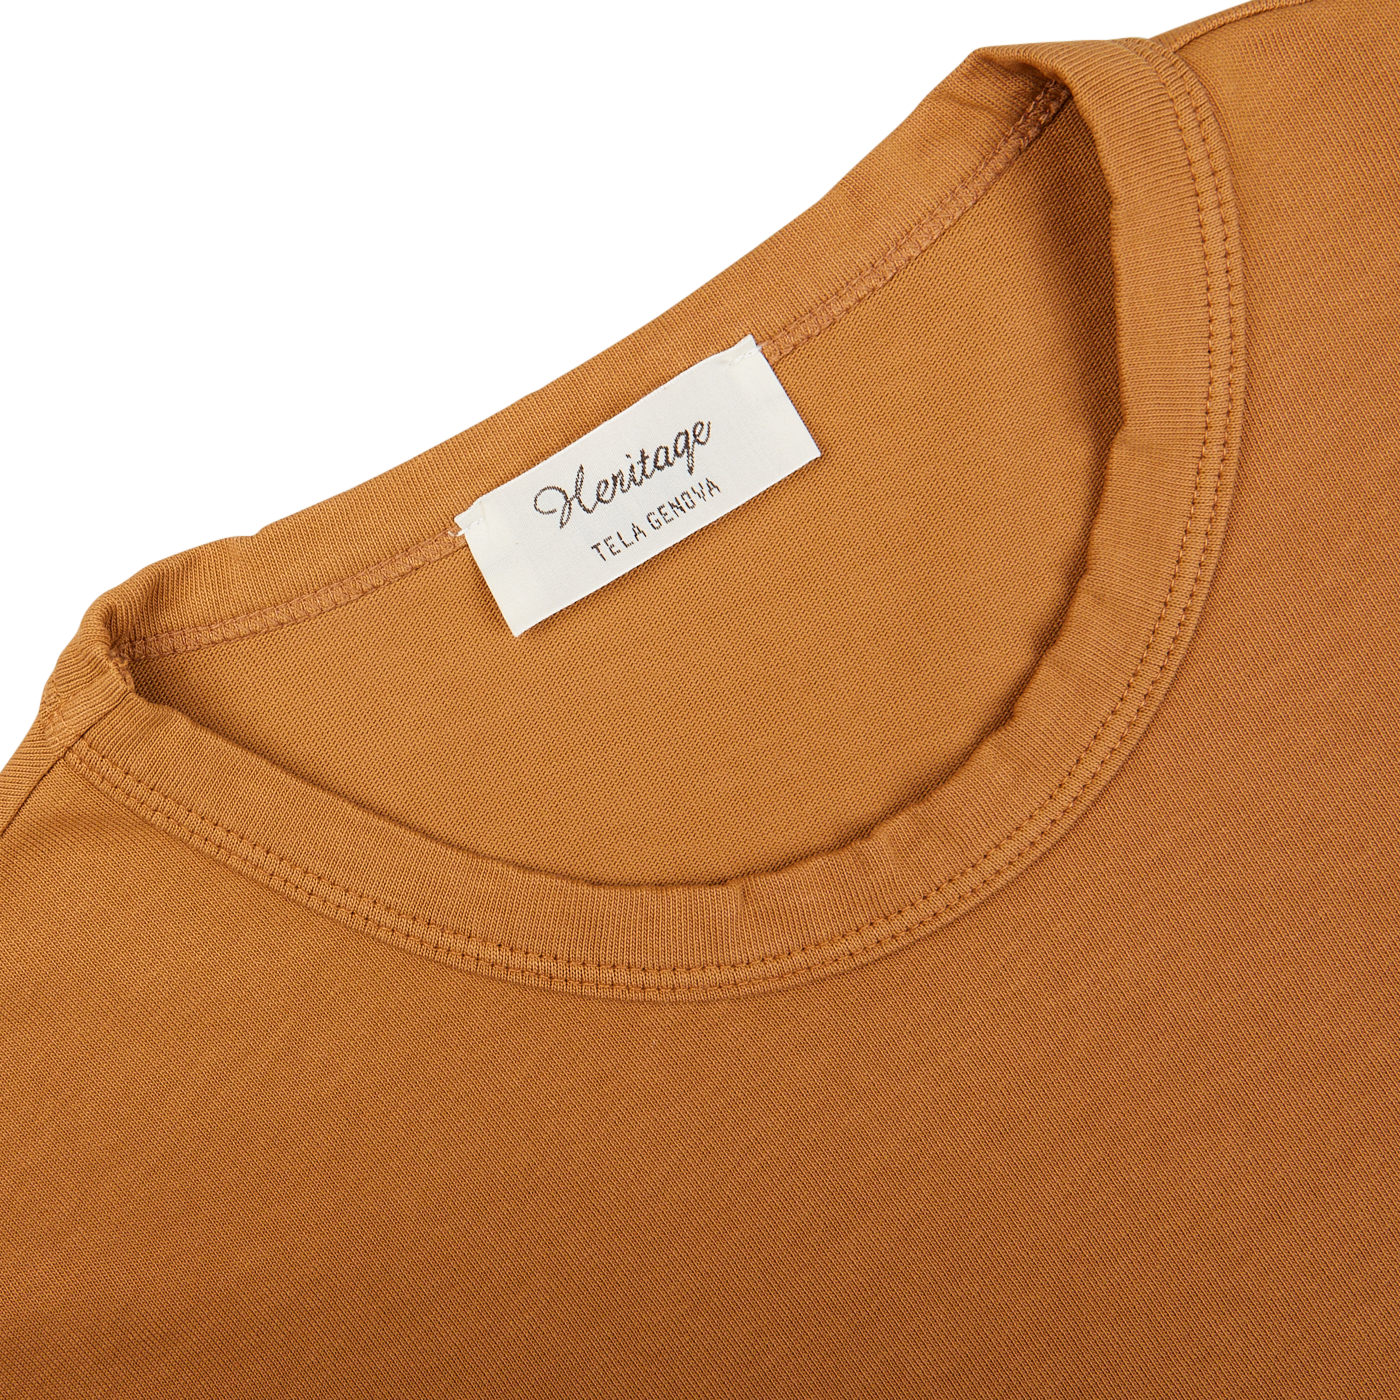 Close-up of a Brick Orange Heavy Organic Cotton T-Shirt's neckline with a Tela Genova white brand label, made from organic cotton.